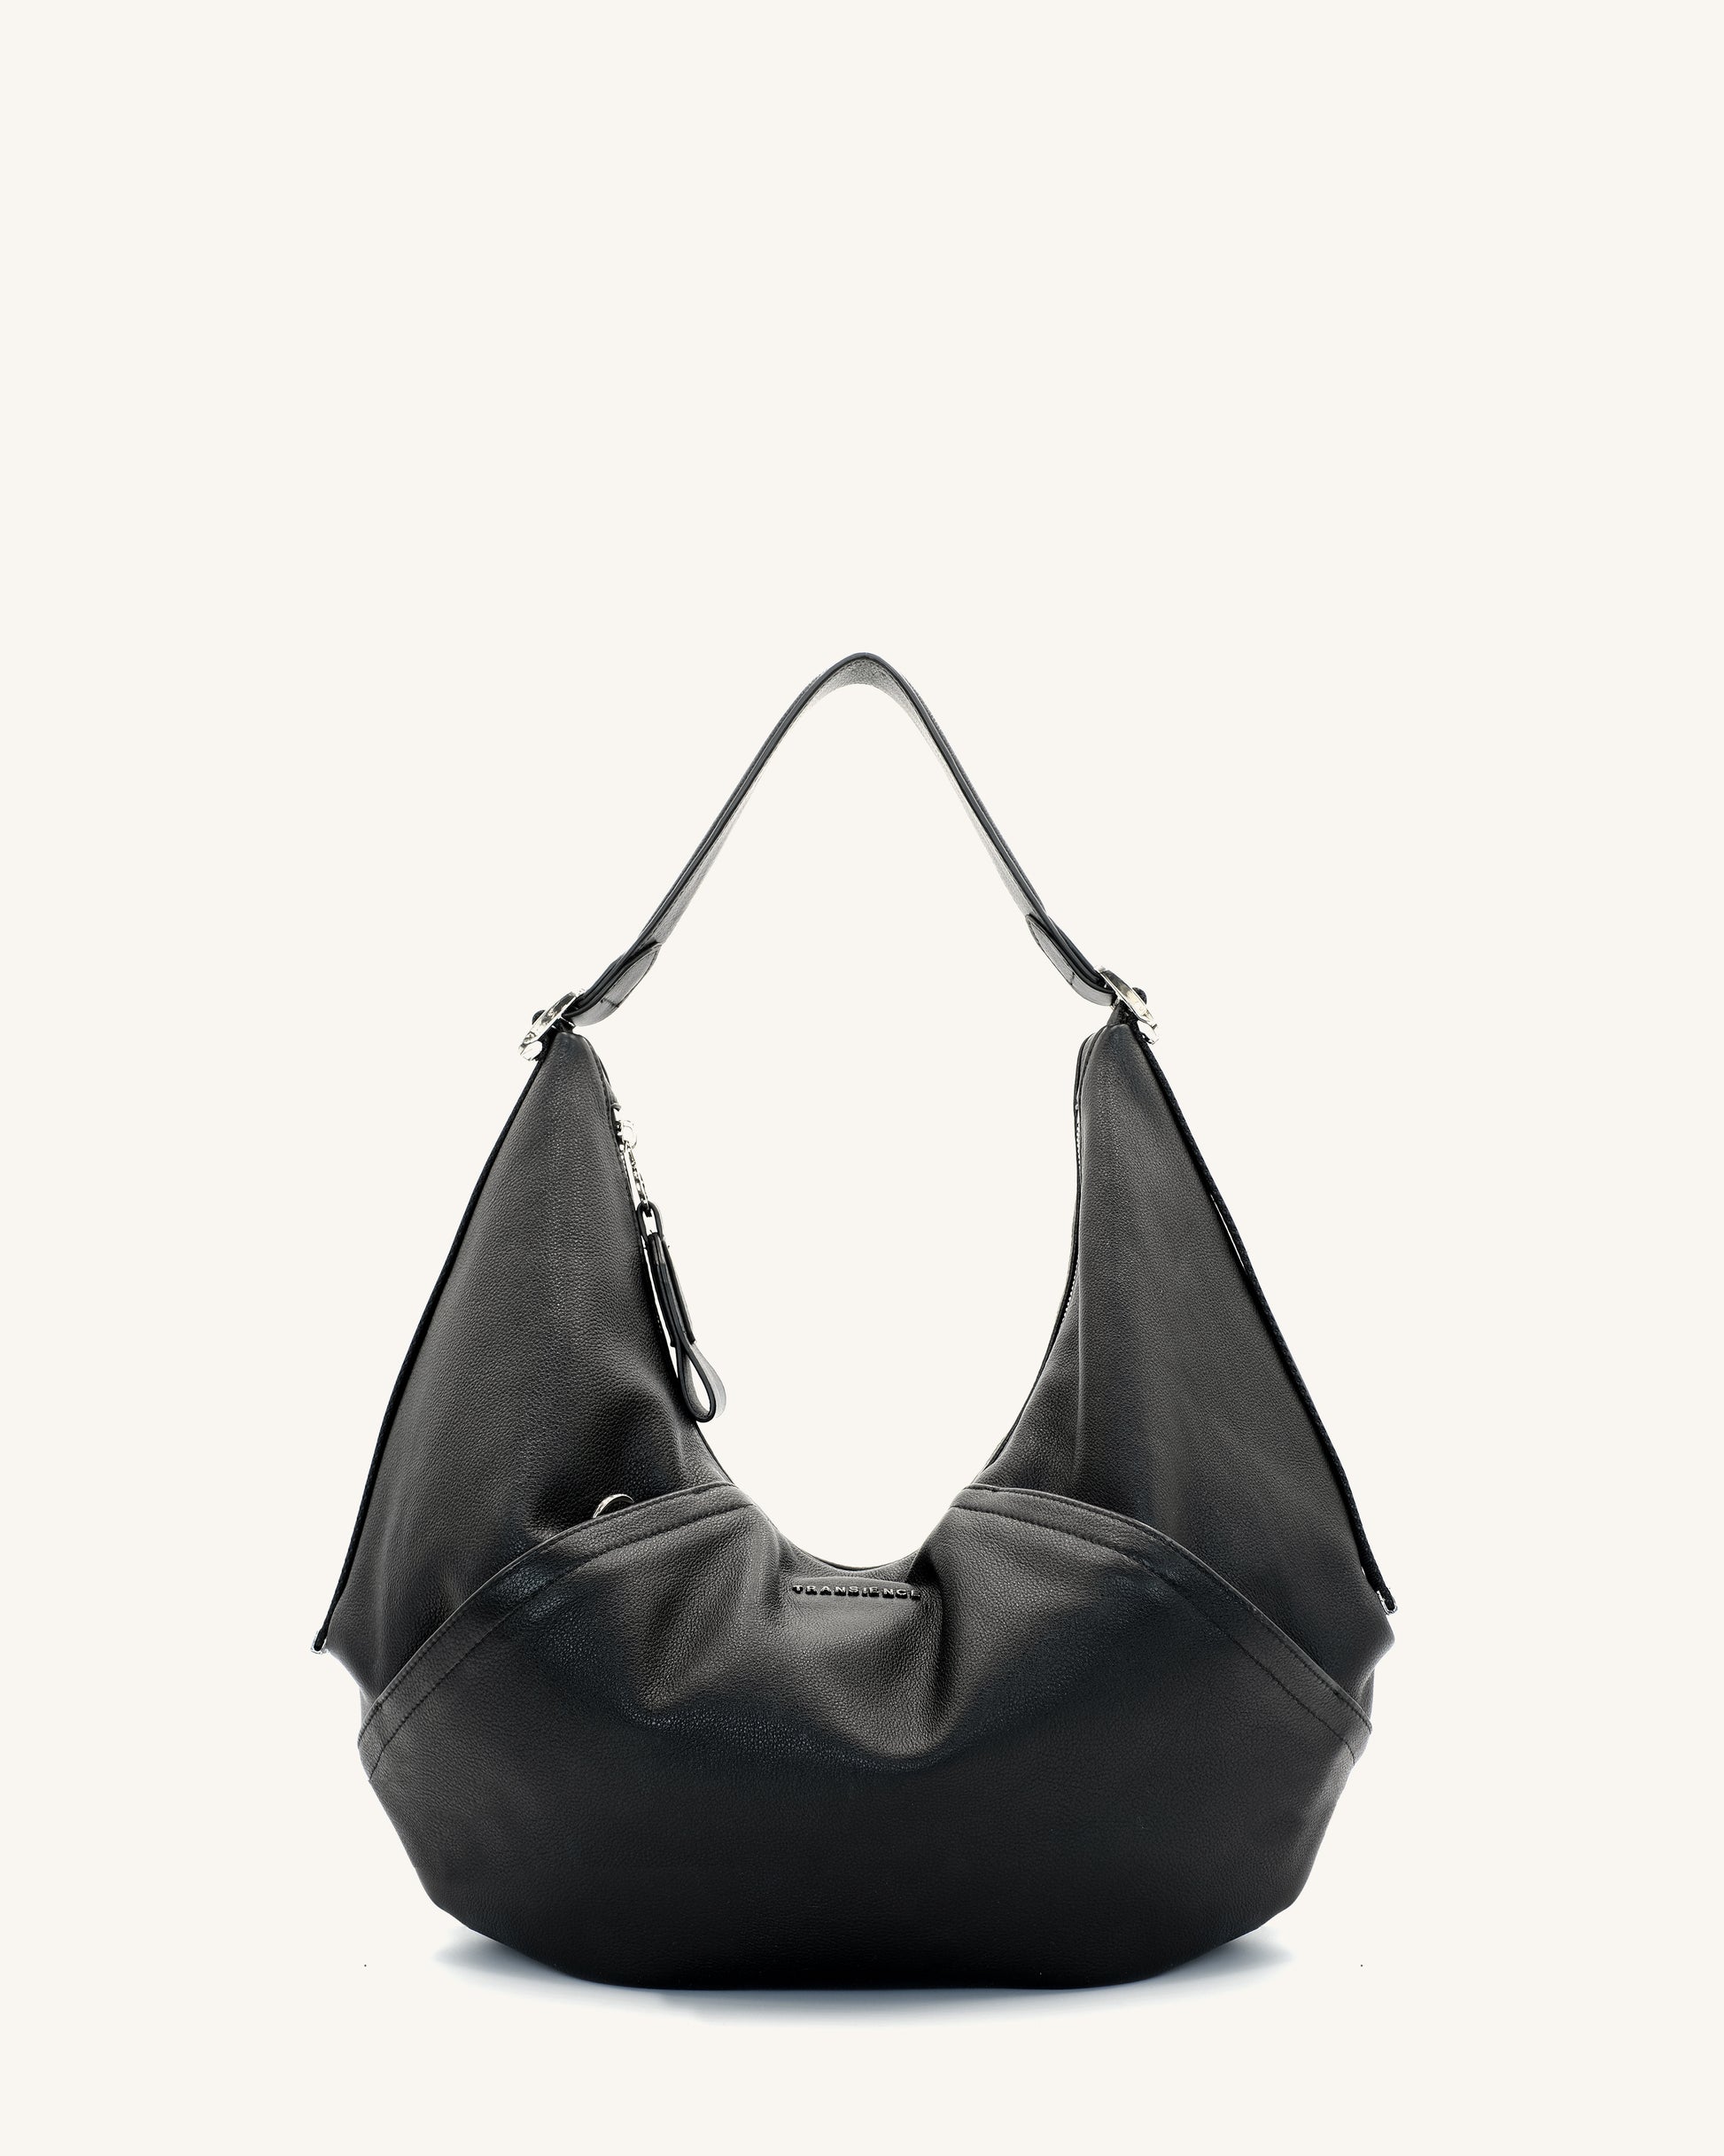 Crossbody Bag - Pebble Leather - Black